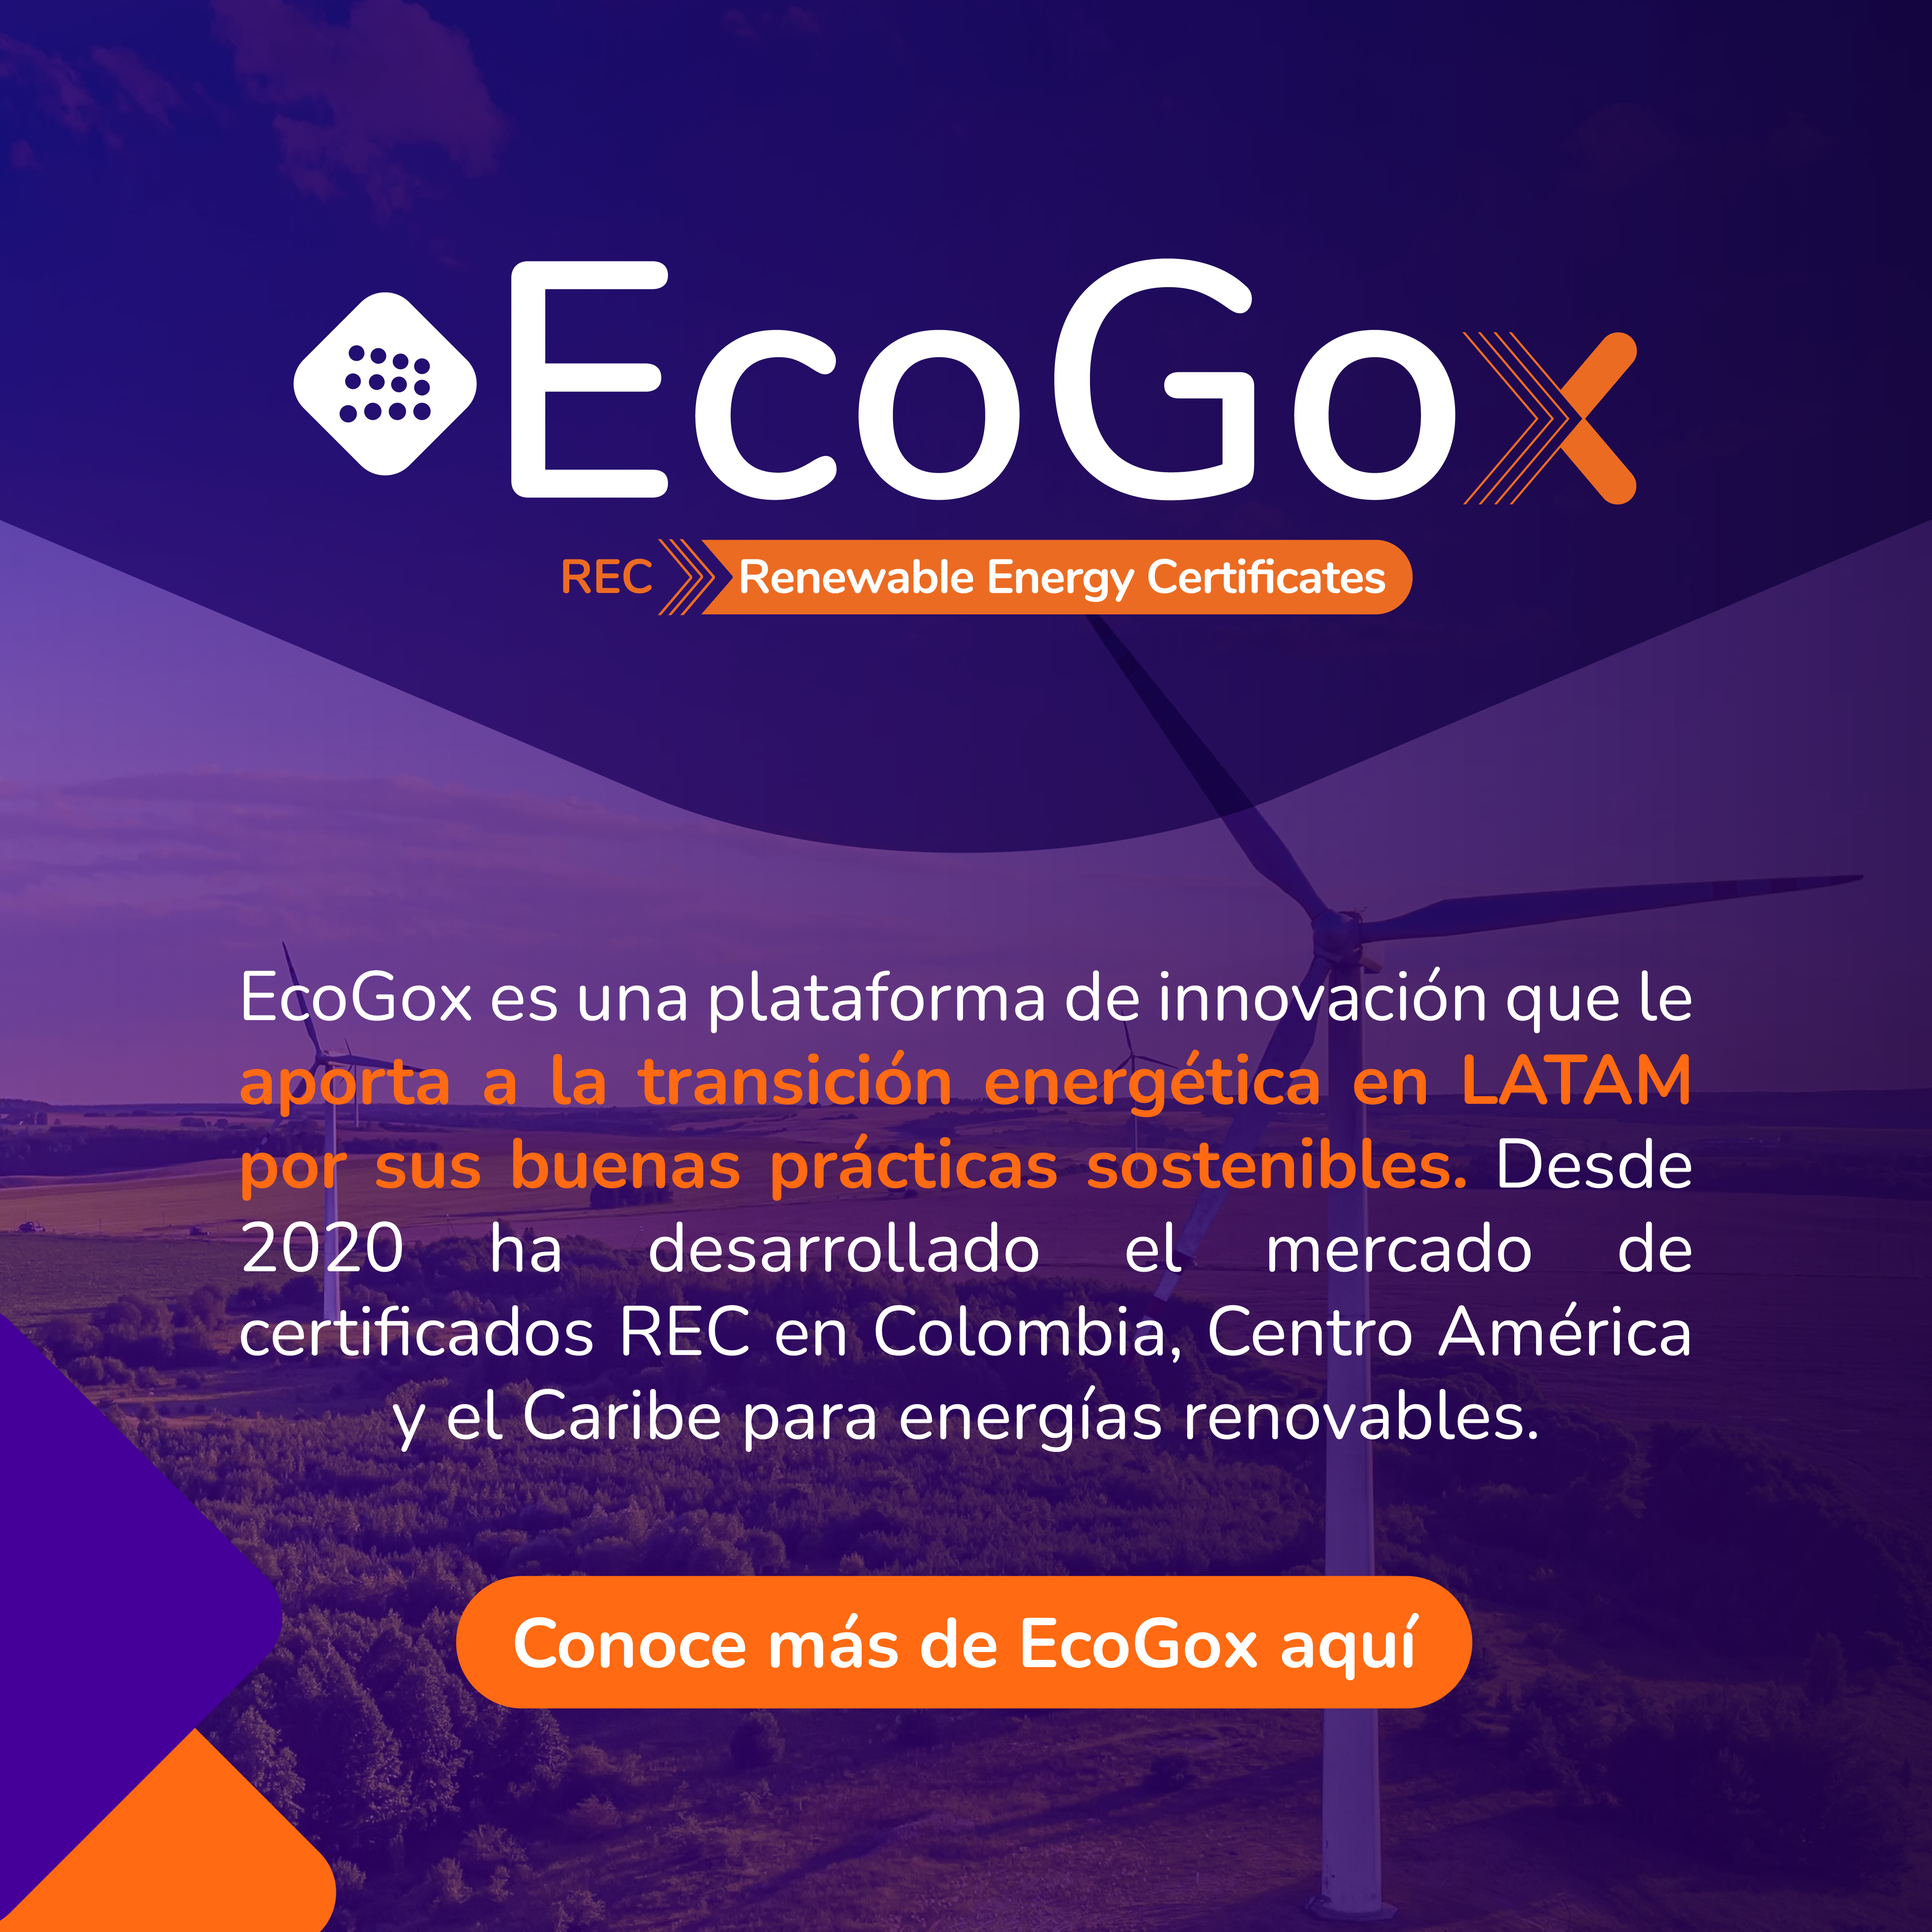 EcoGox_Renewable Energy Certificates